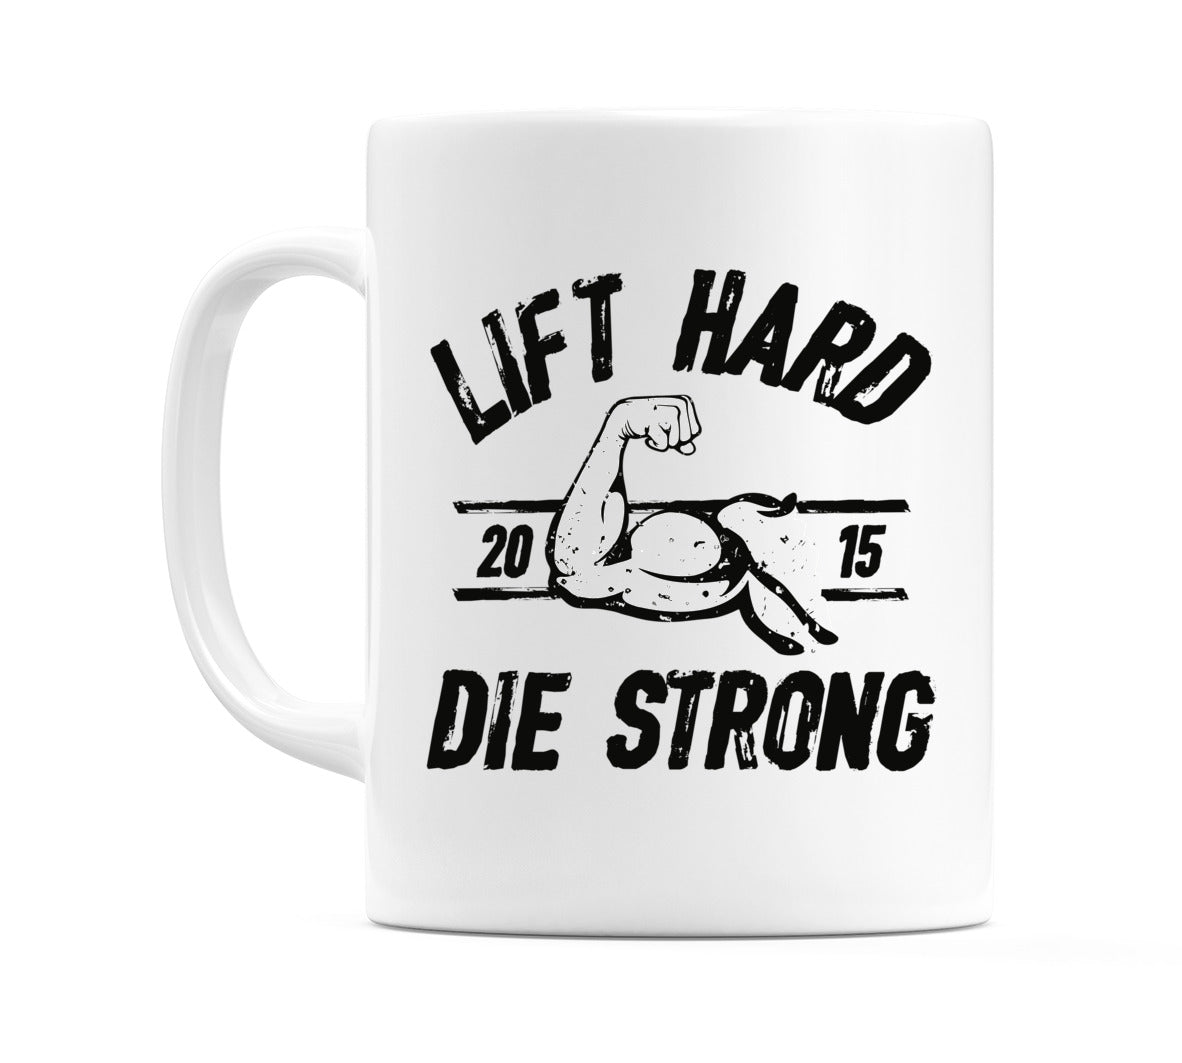 Lift Hard Die Strong Mug